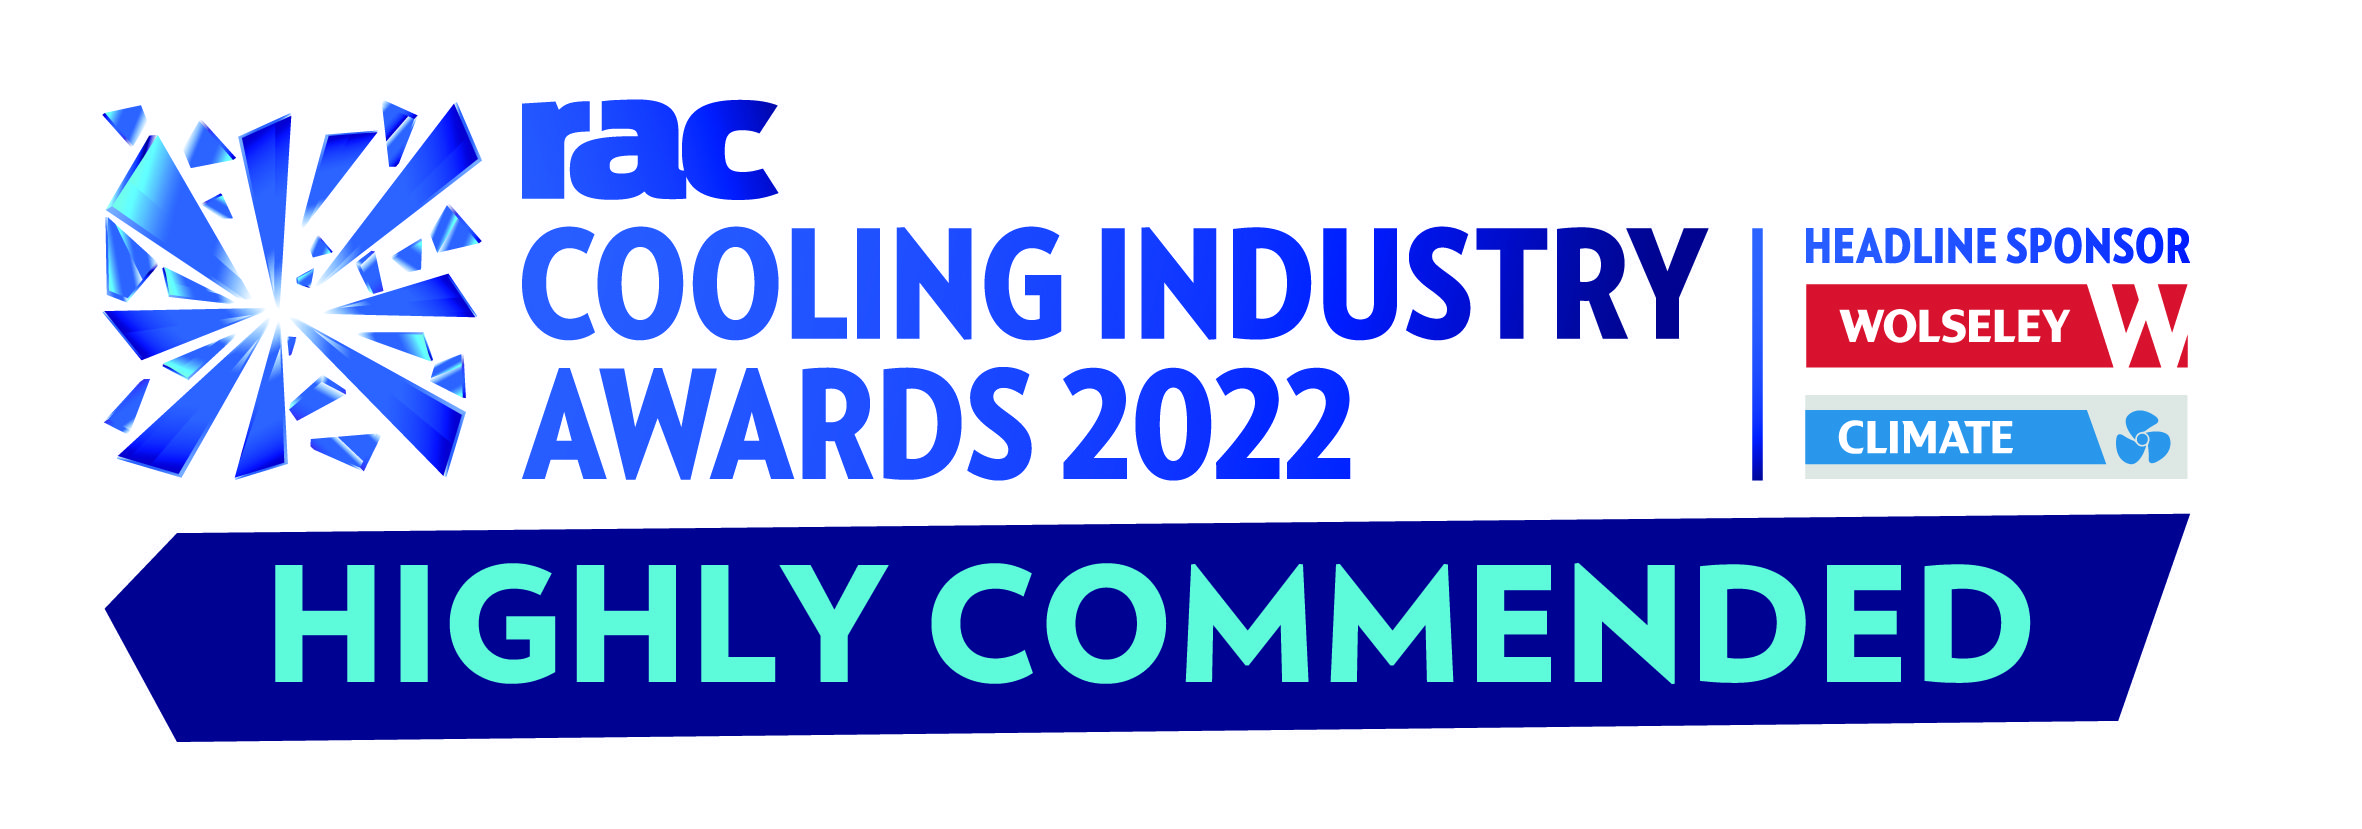 https://ultra-refrigeration.com/wp-content/uploads/2021/07/Cooling-Awards-2022-Participation-logos-Highly-Commended-HR.jpg